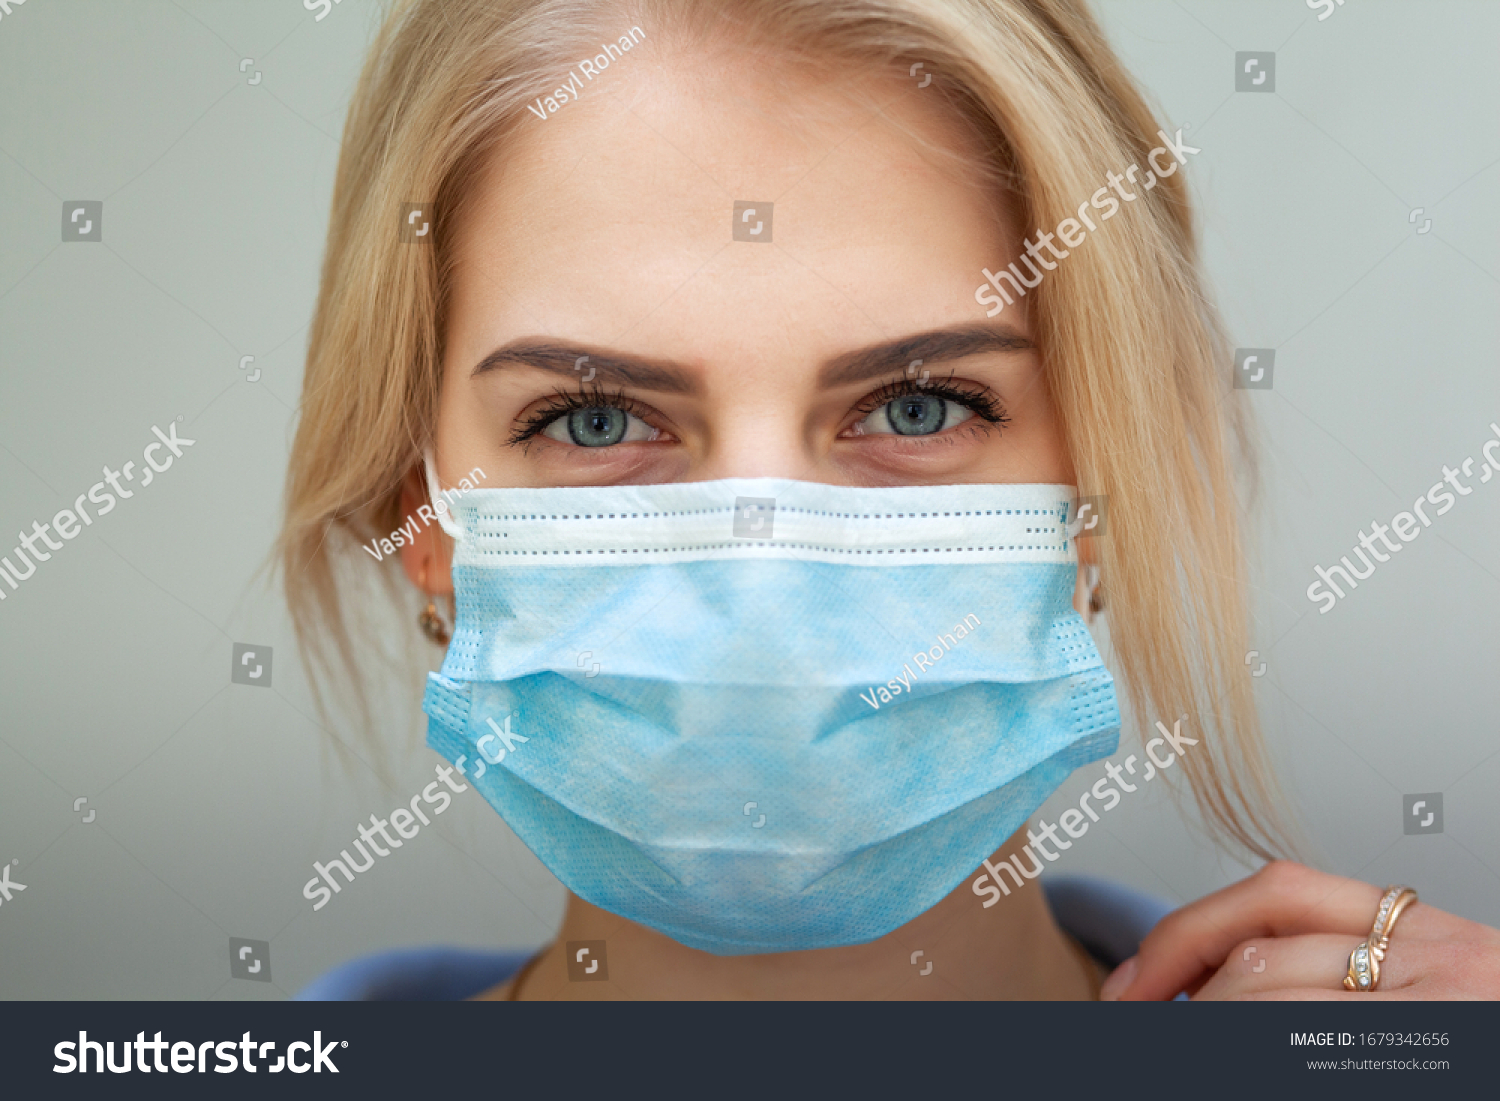 surgical masks canada black